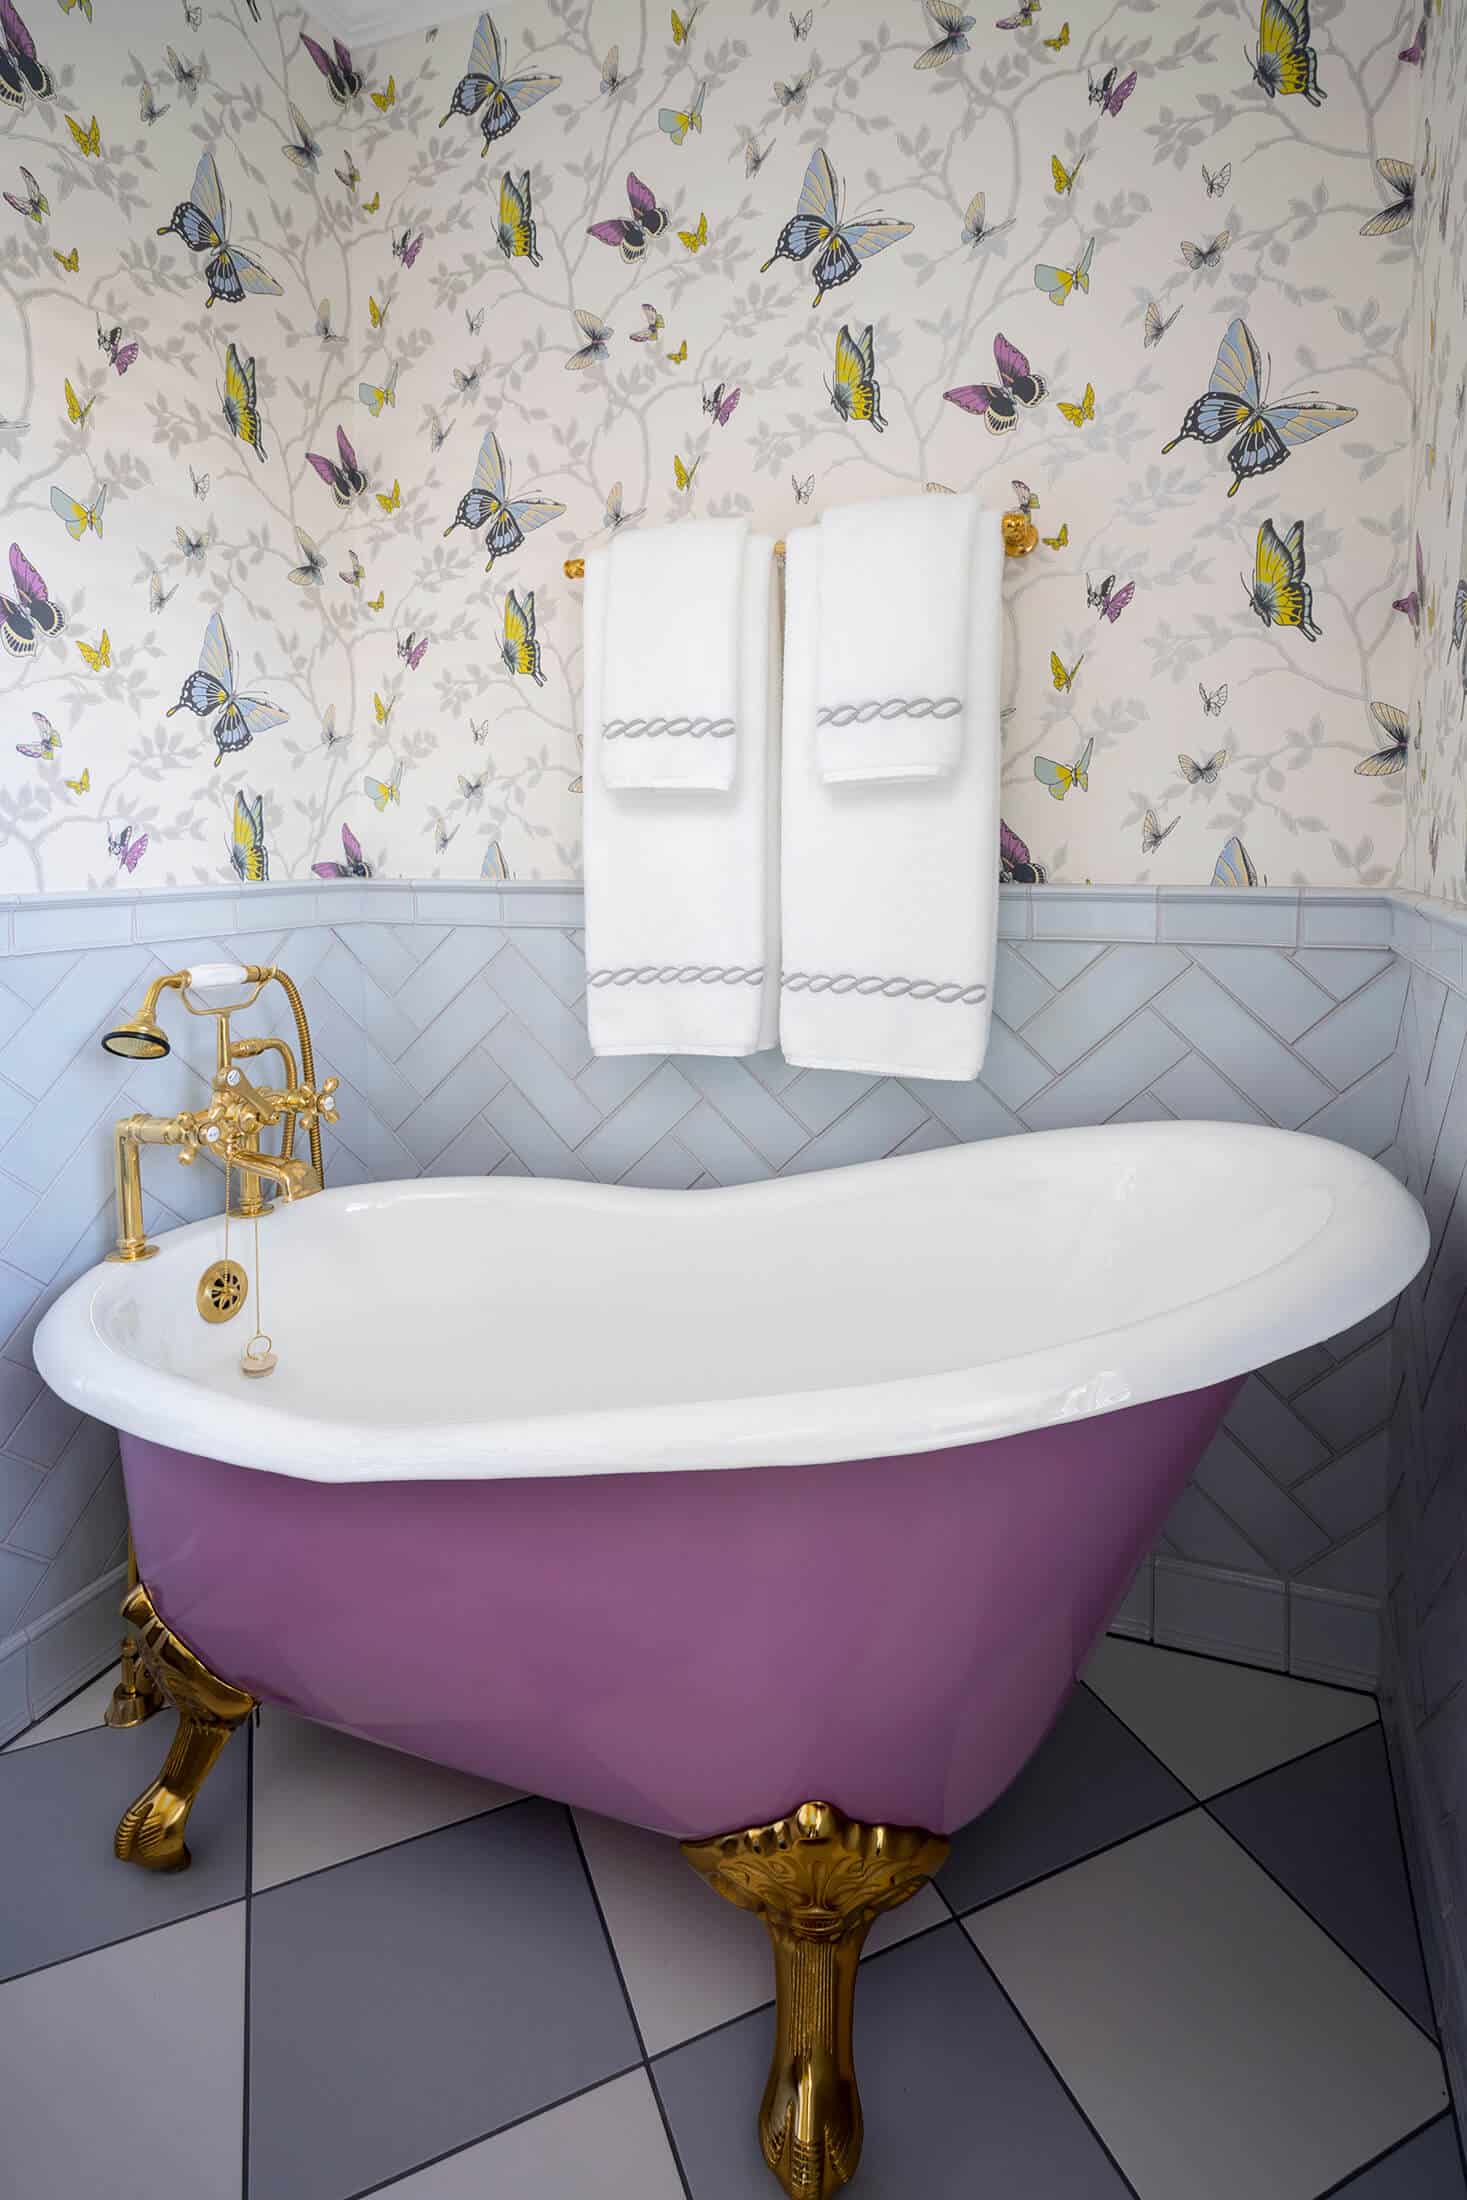 Reusch Interior Design - Hyde Park - Cincinnati, OH - Bathroom Interior Design - Purple tub